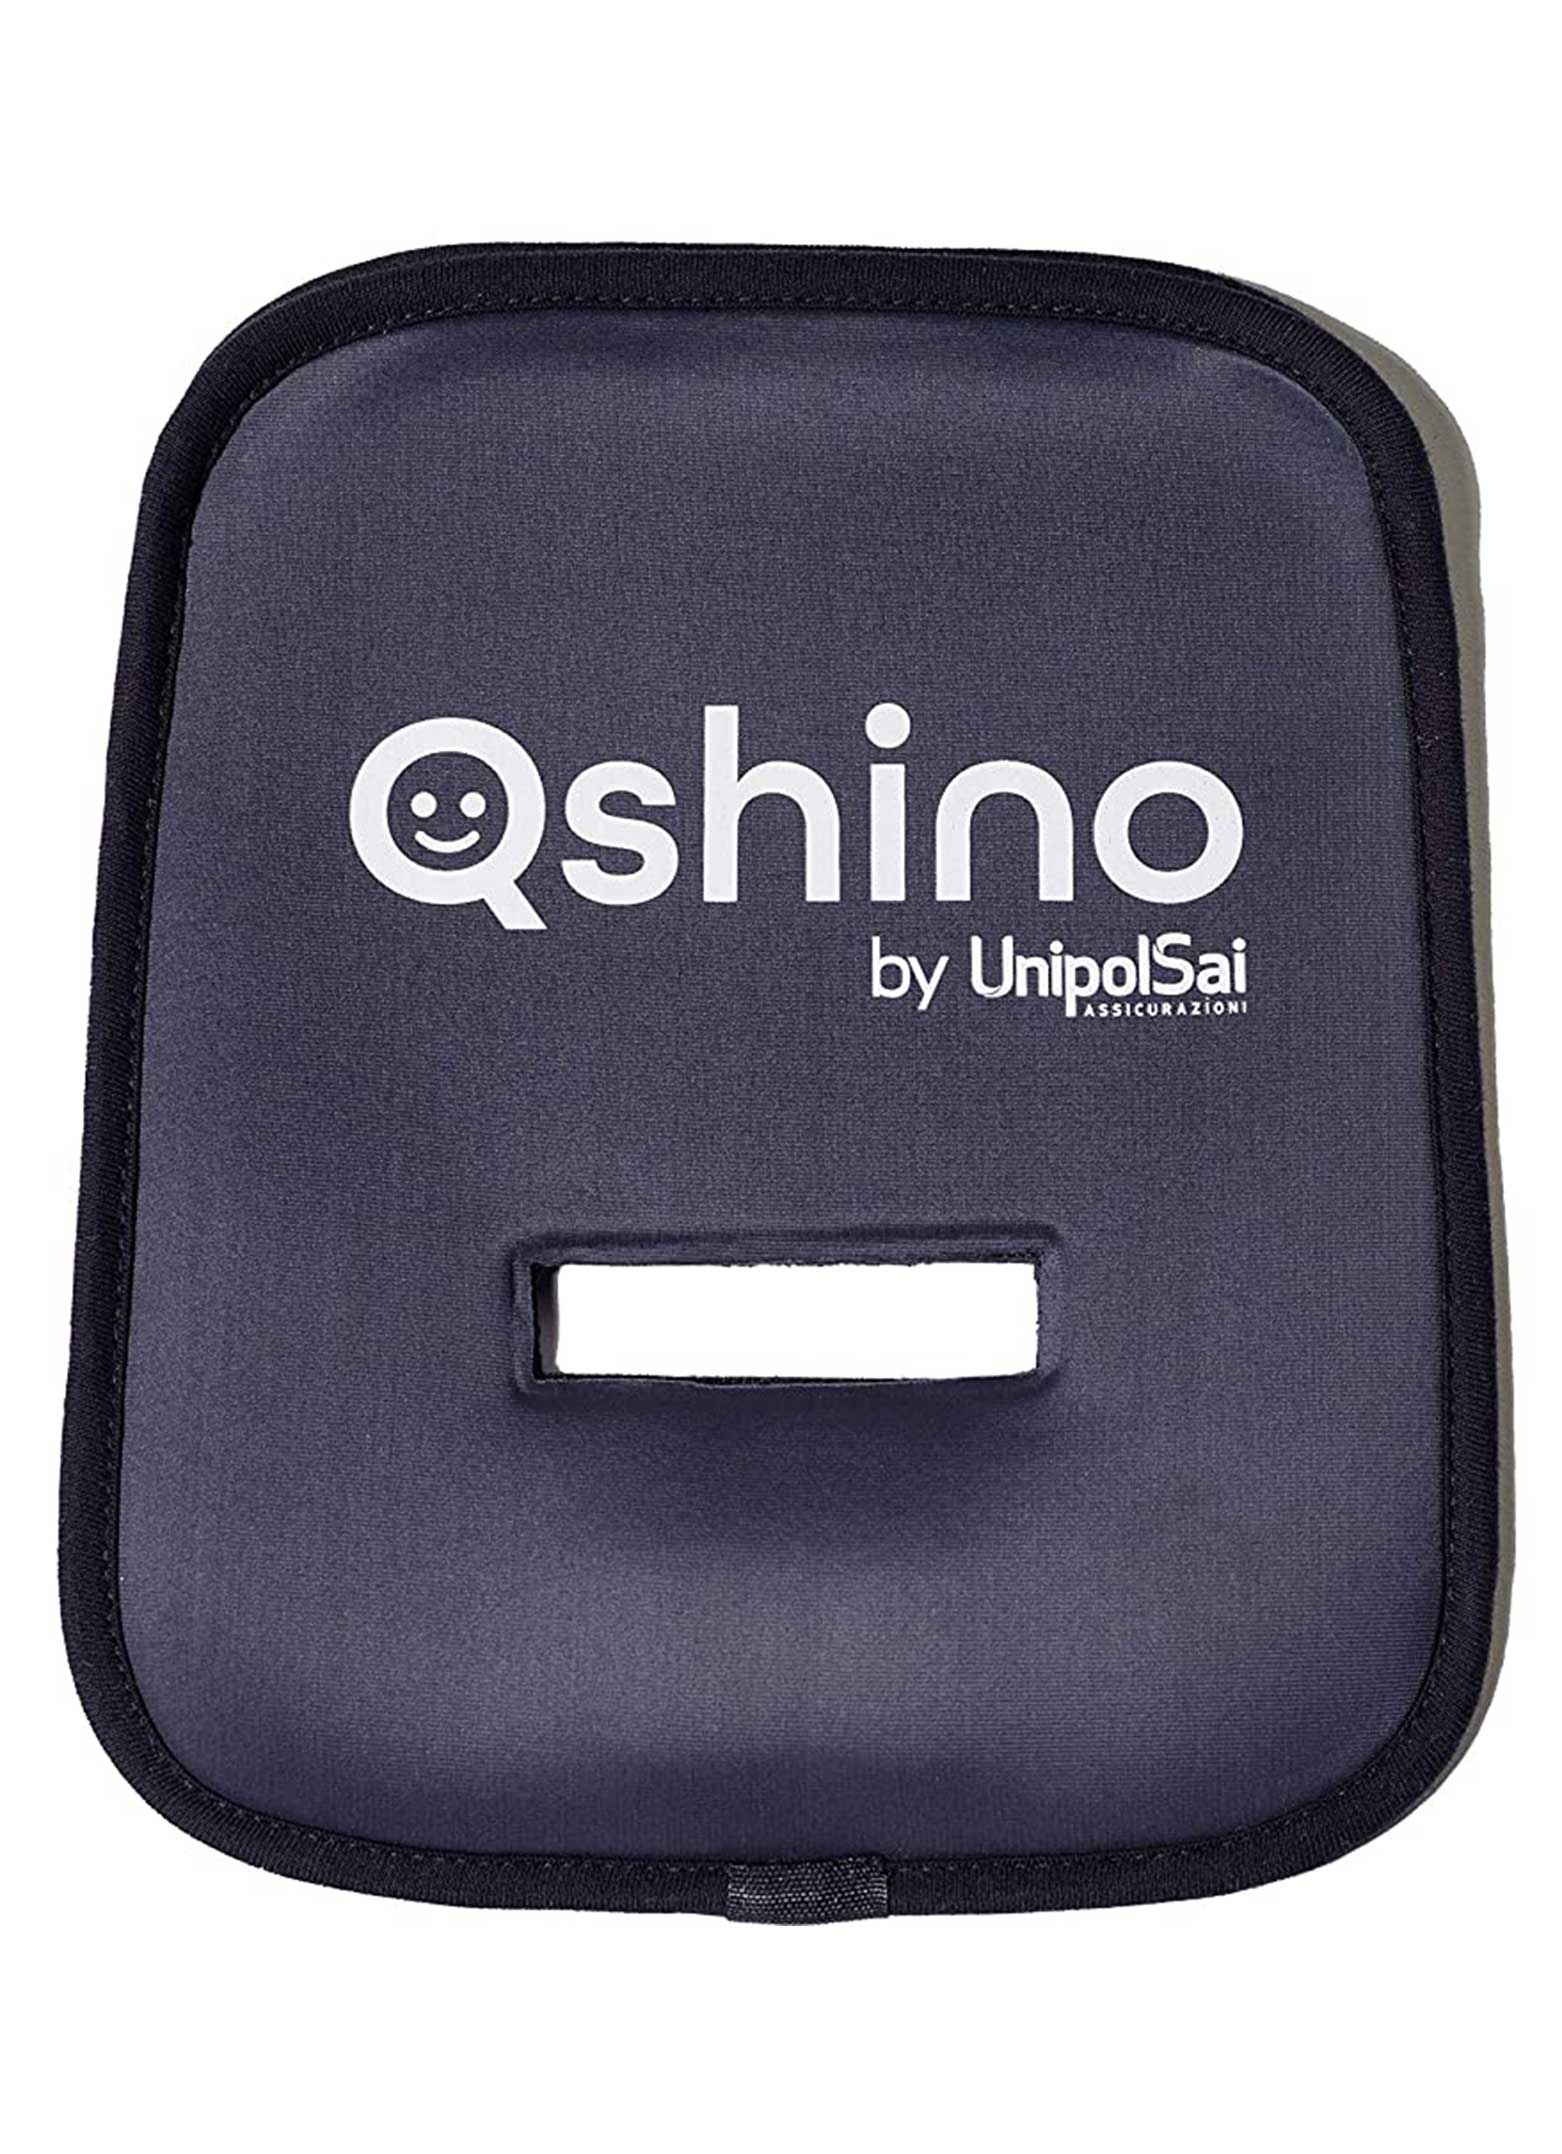 Qshino UnipolSai